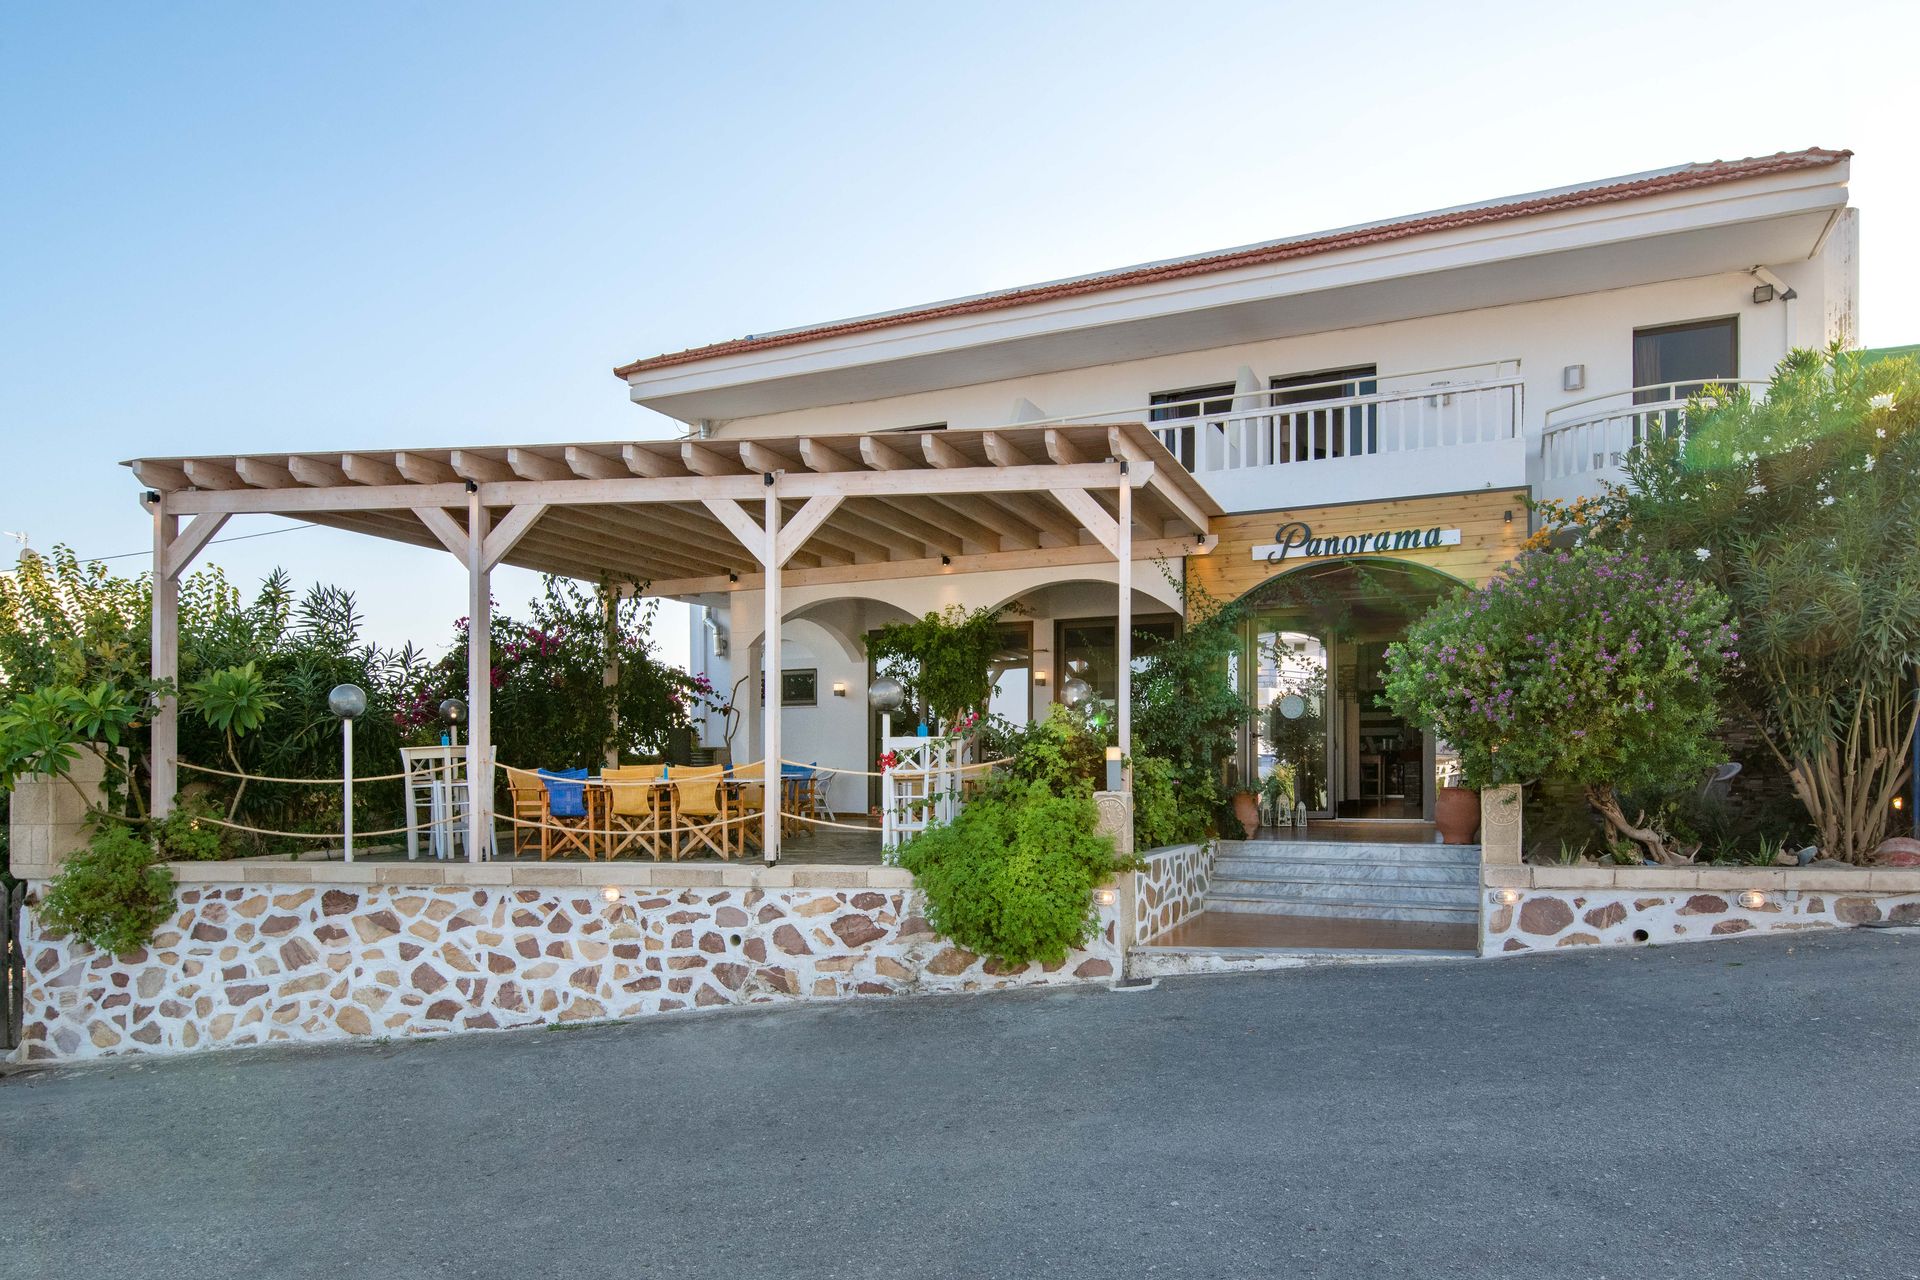 Panorama Gennadi Guest House & Bistrot - Γεννάδι, Ρόδος ✦ 2 Ημέρες (1 Διανυκτέρευση) ✦ 2 άτομα ✦ 1 ✦ 01/05/2022 έως 30/09/2022 ✦ Κοντά σε παραλία!